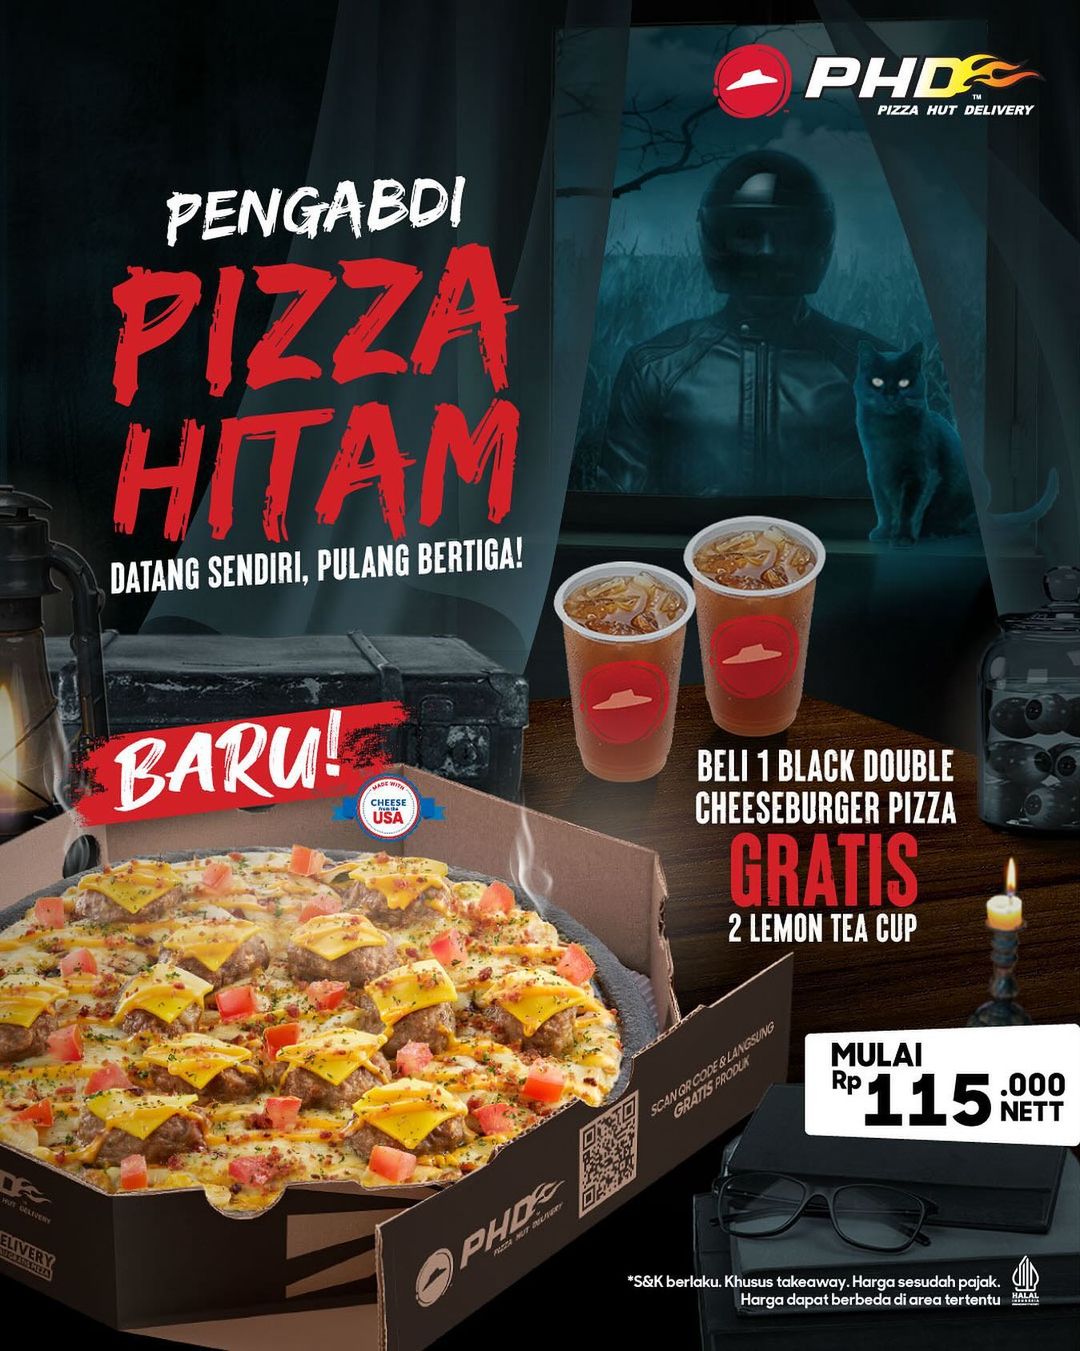 BARU! Promo PHD Pizza Hitam - Beli 1 Black Double Cheeseburger Pizza Gratis 2 Lemon Tea